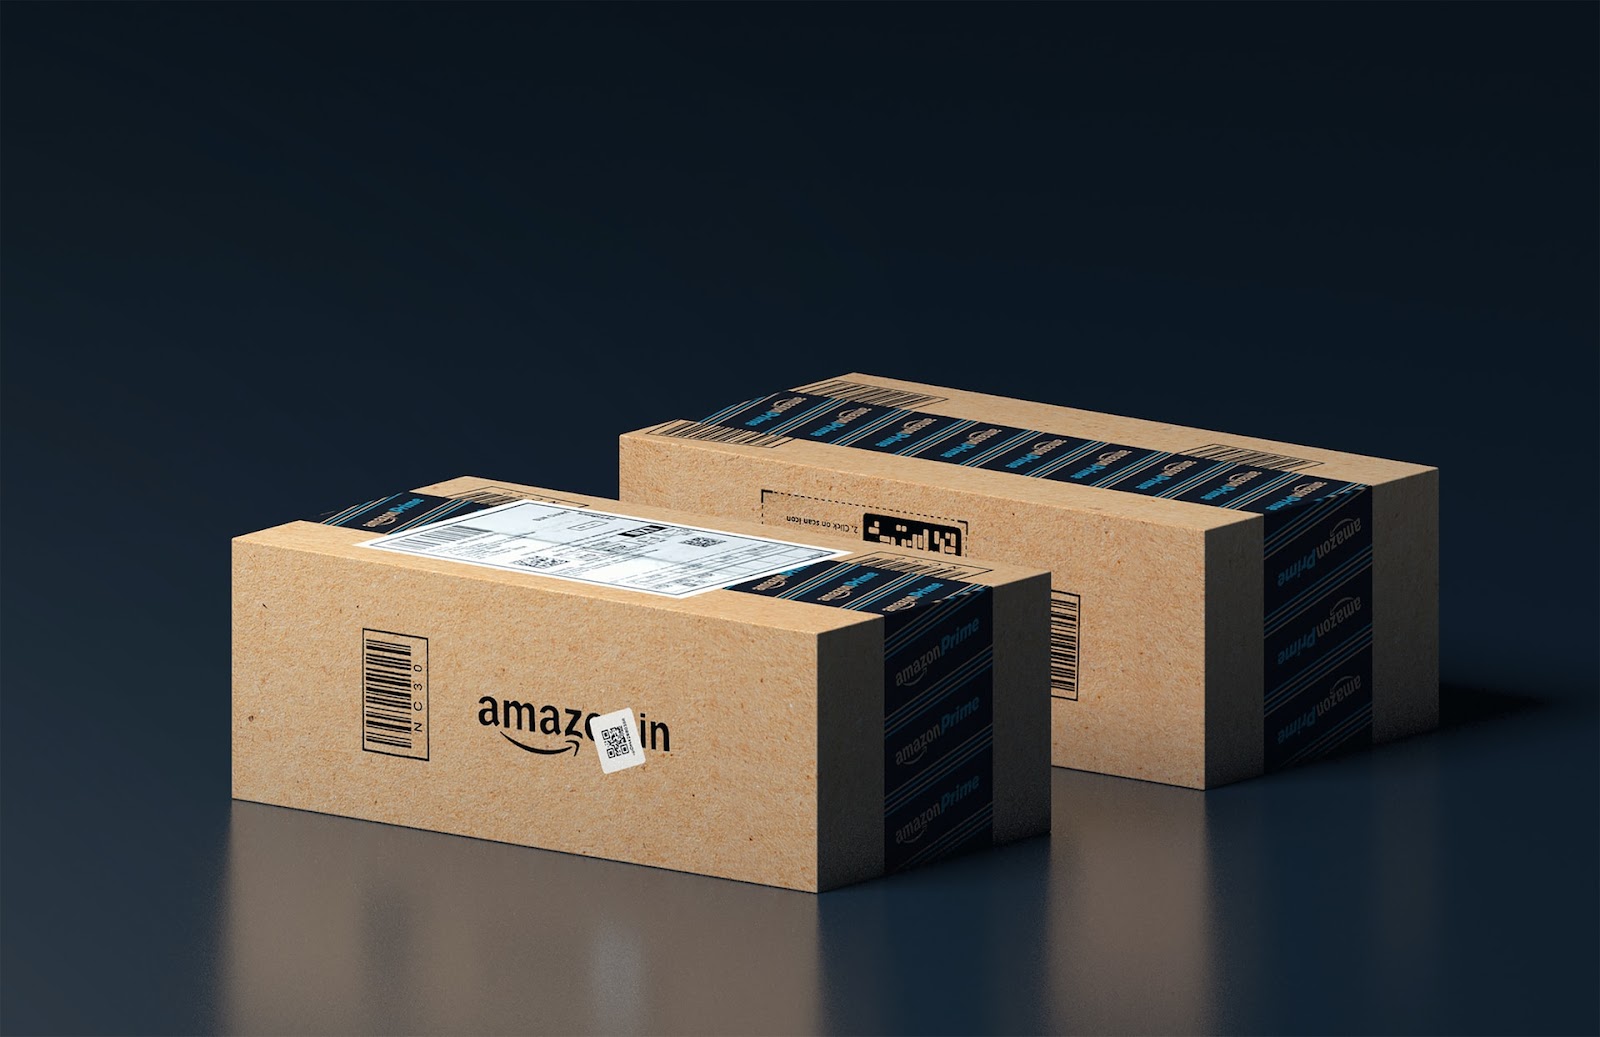 2 amazon boxes - Prime day deal